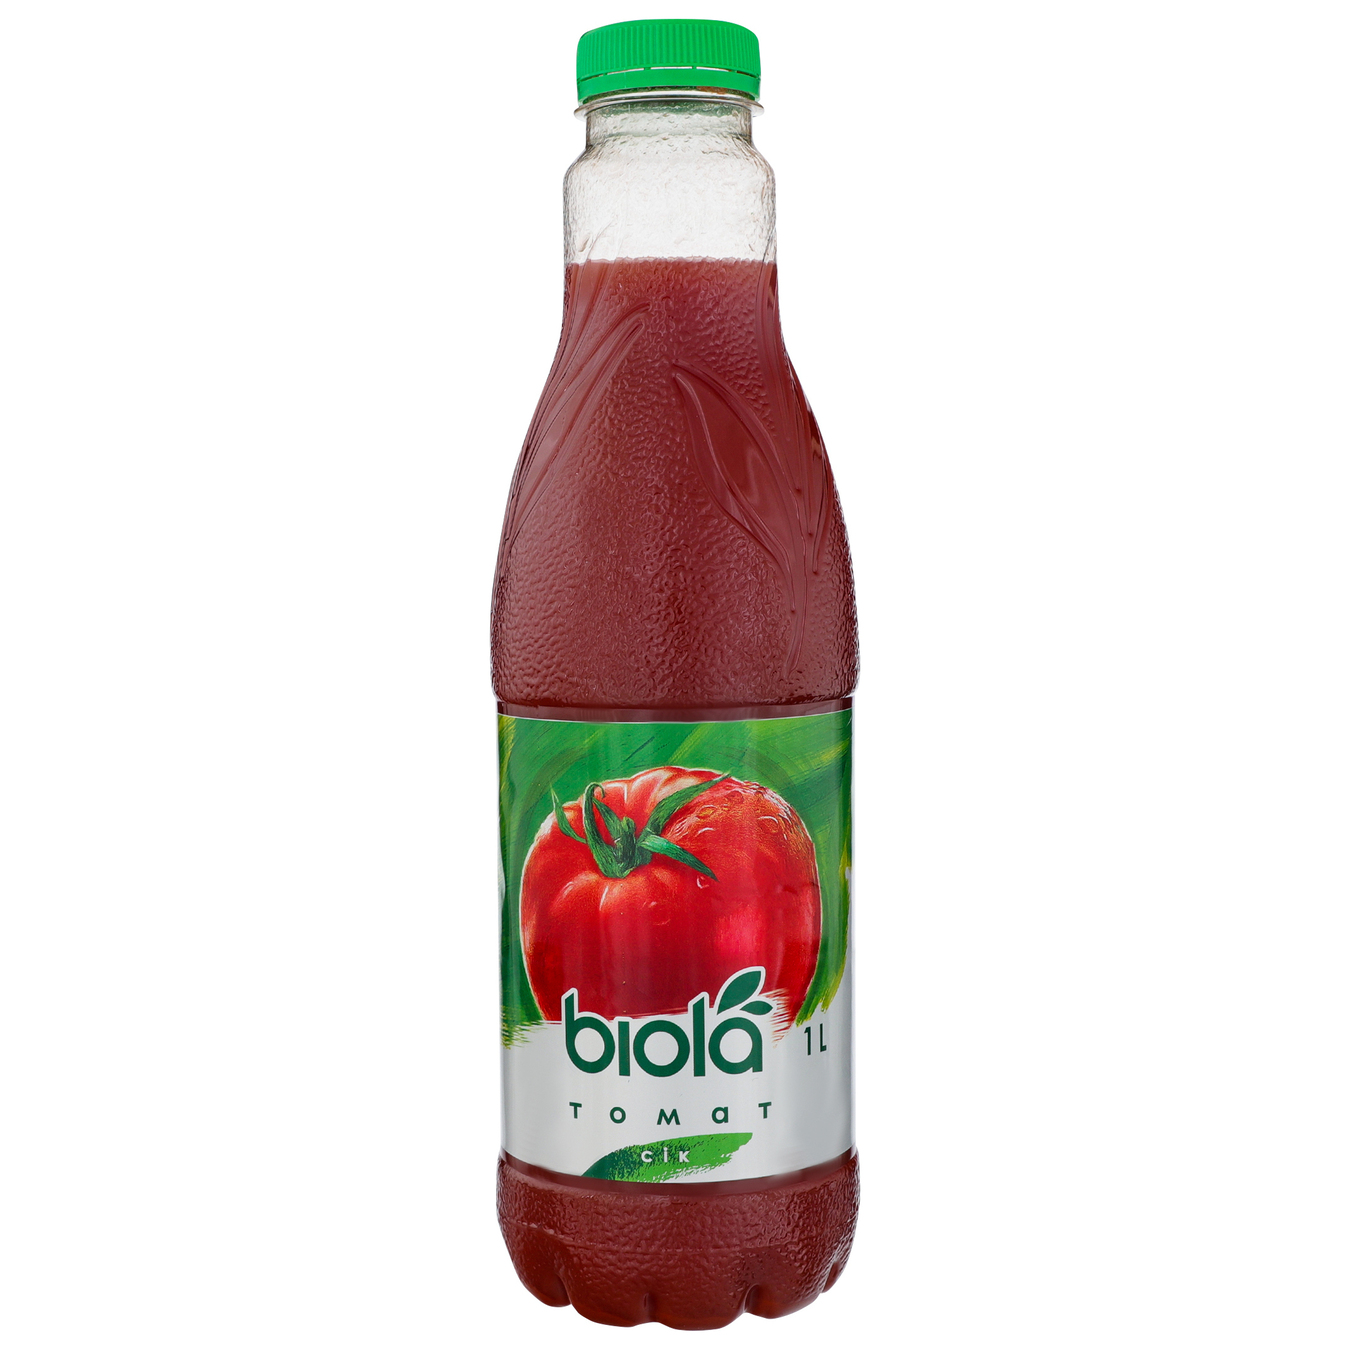 Biola tomato juice with salt 1 liter